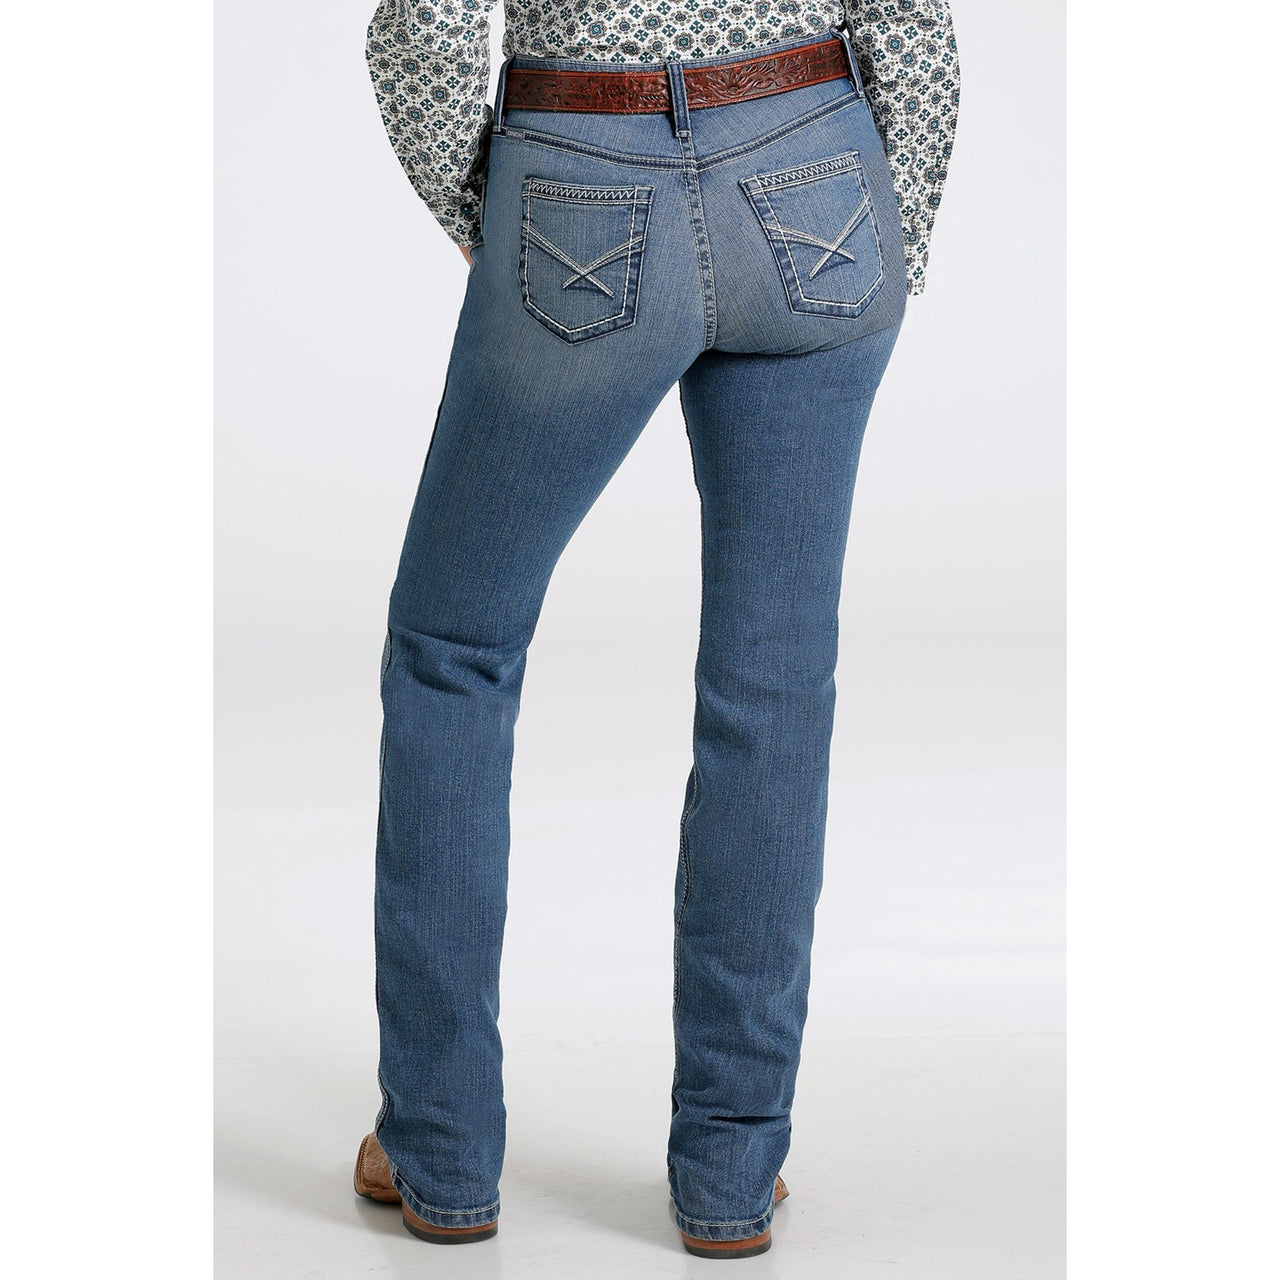 Cinch Women's Shannon Slim Fit Jeans - Medium Stonewash